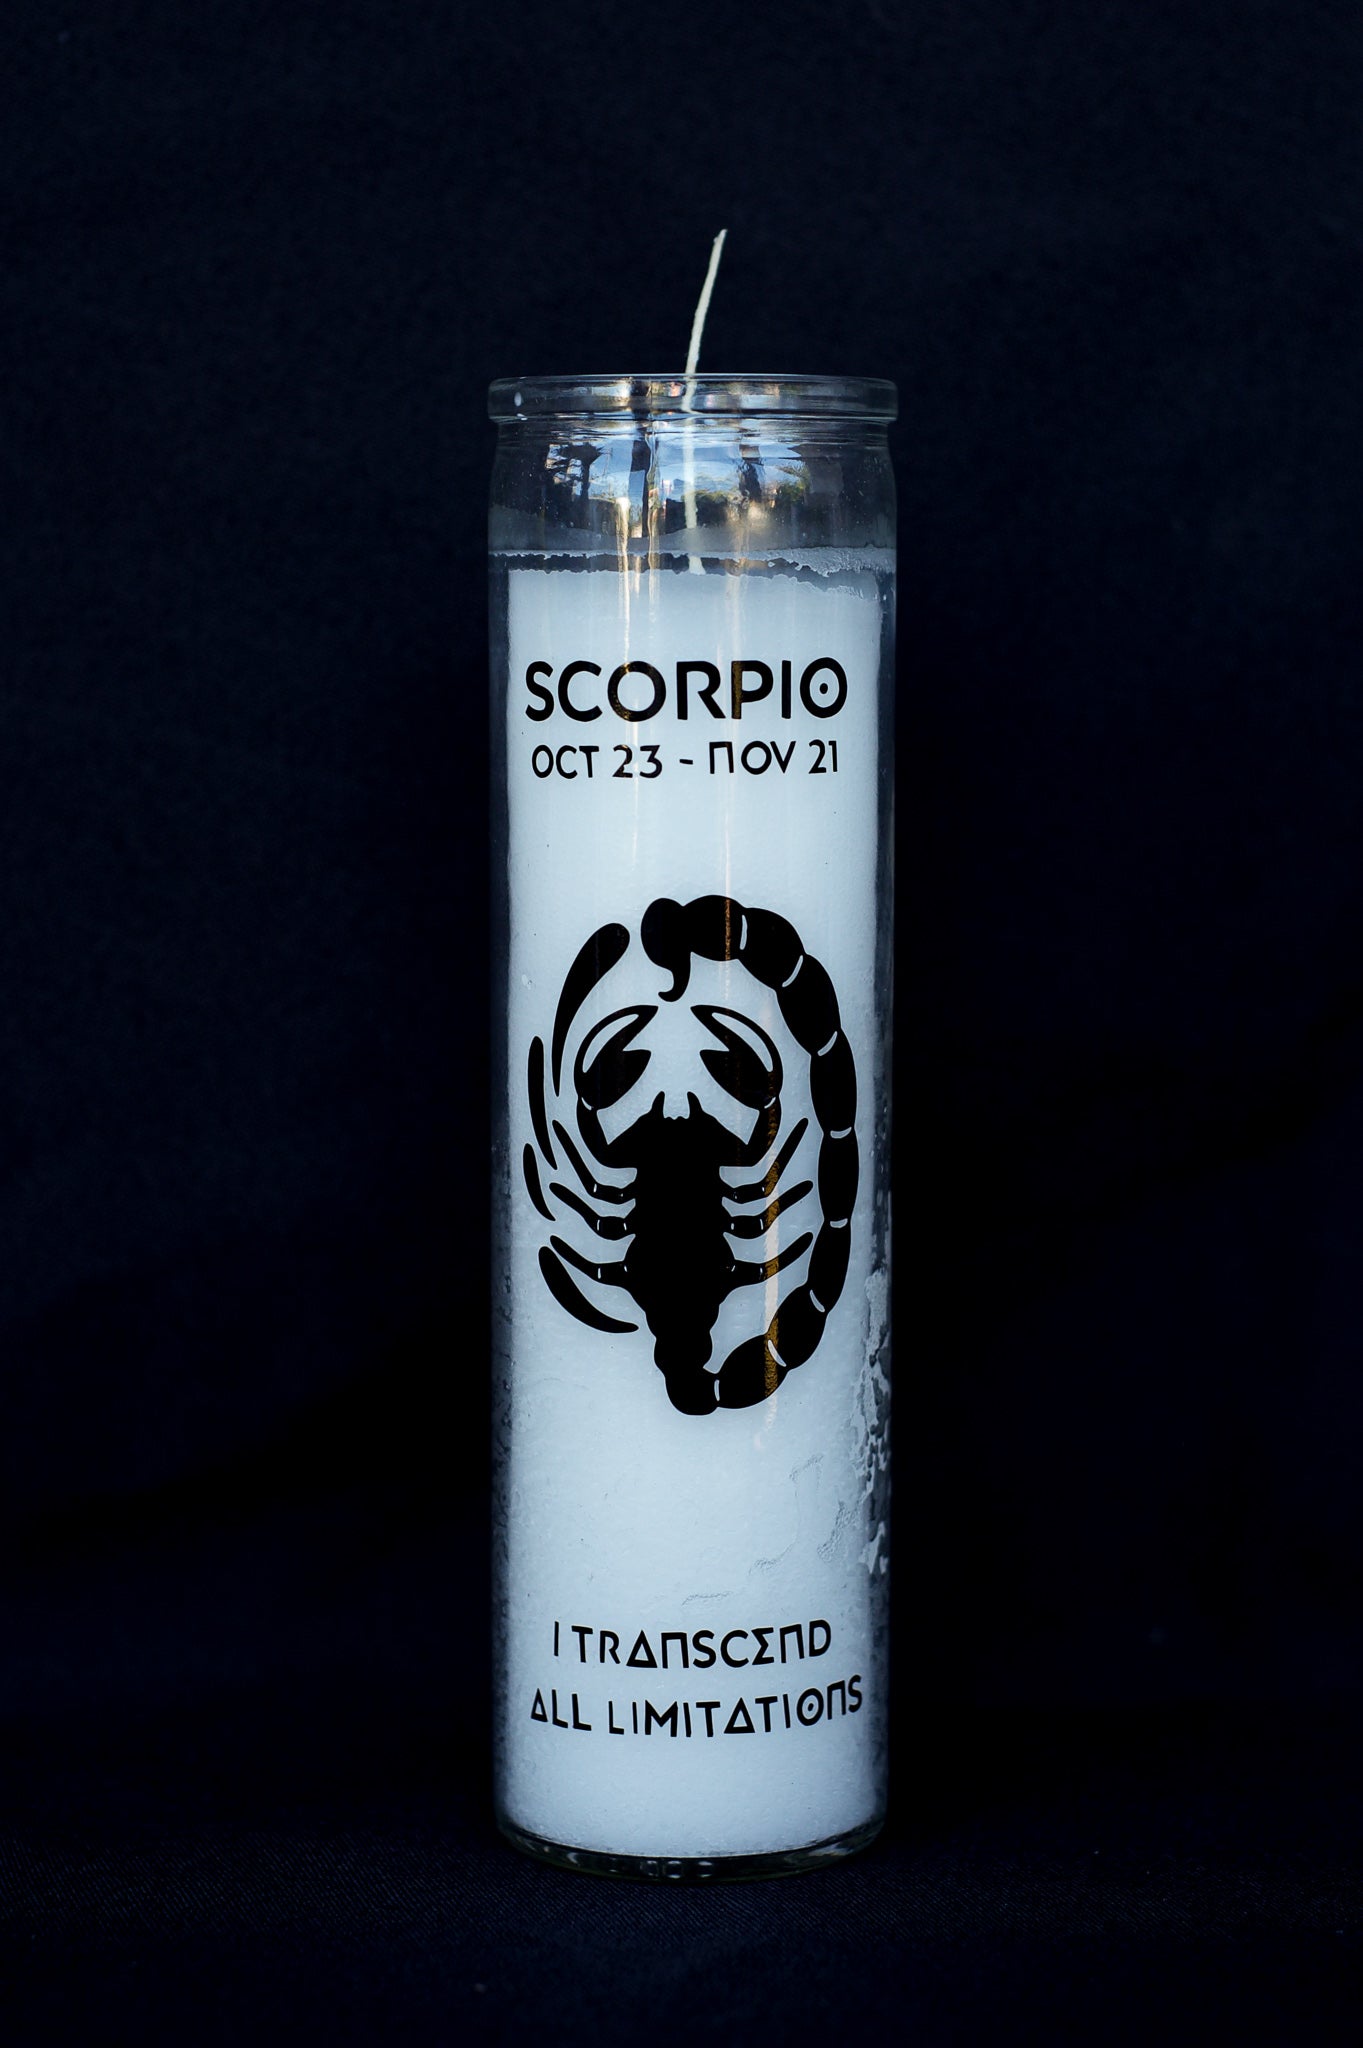 Scorpio Candle